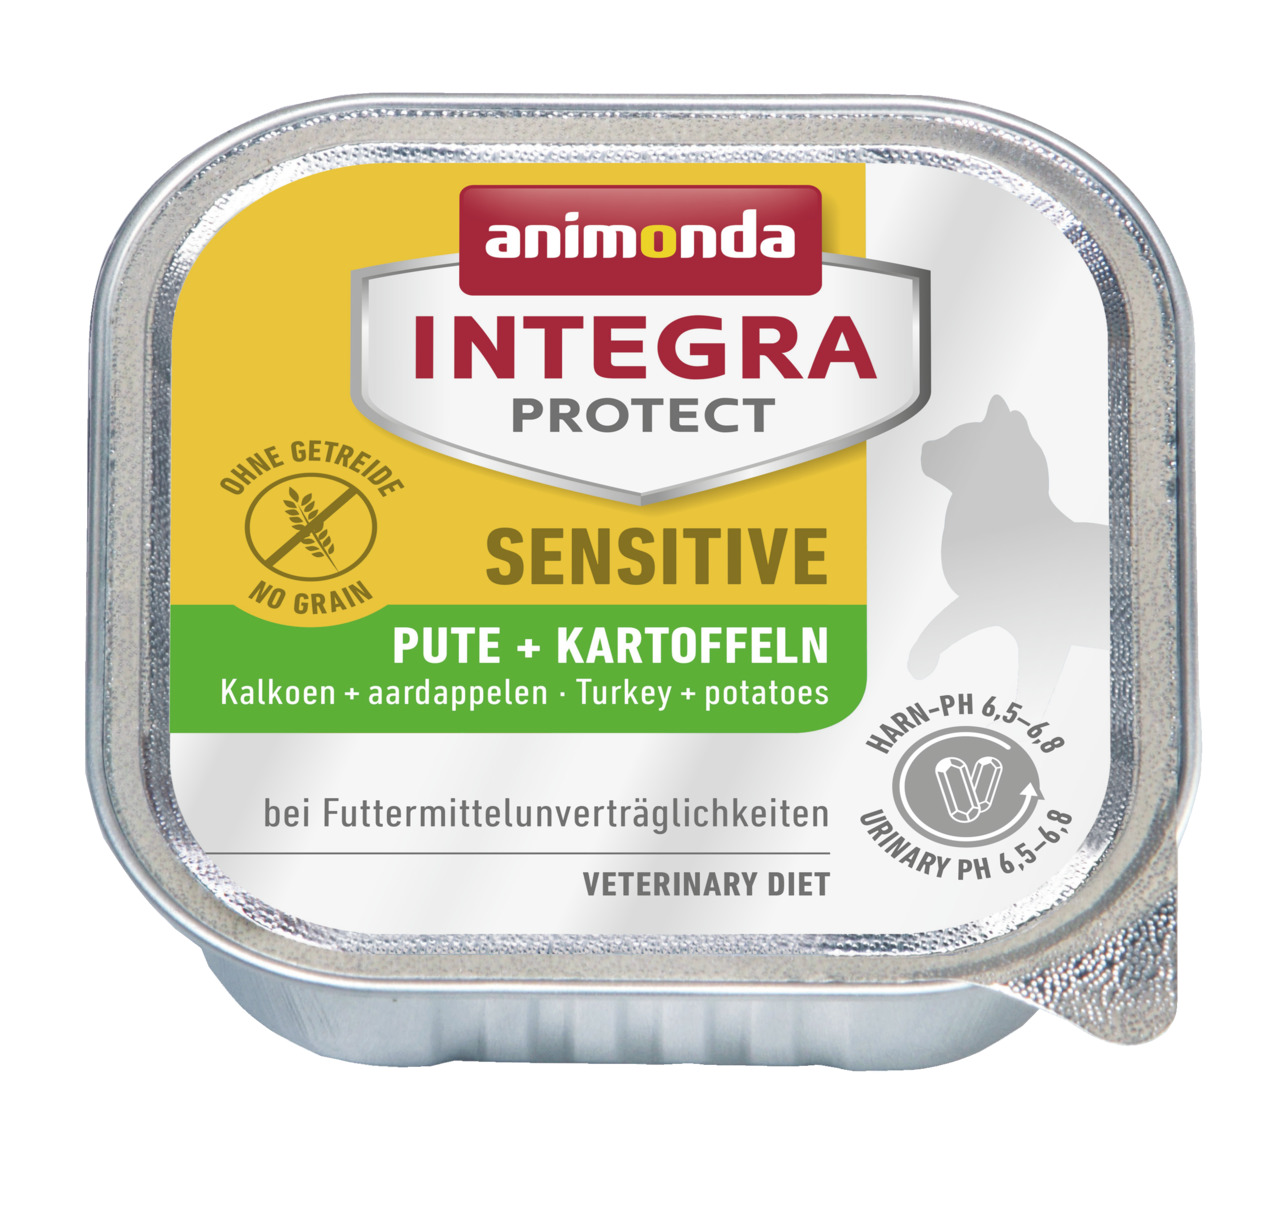 Animonda Integra Protect Sensitive Pute + Kartoffeln Katzen Nassfutter 100 g